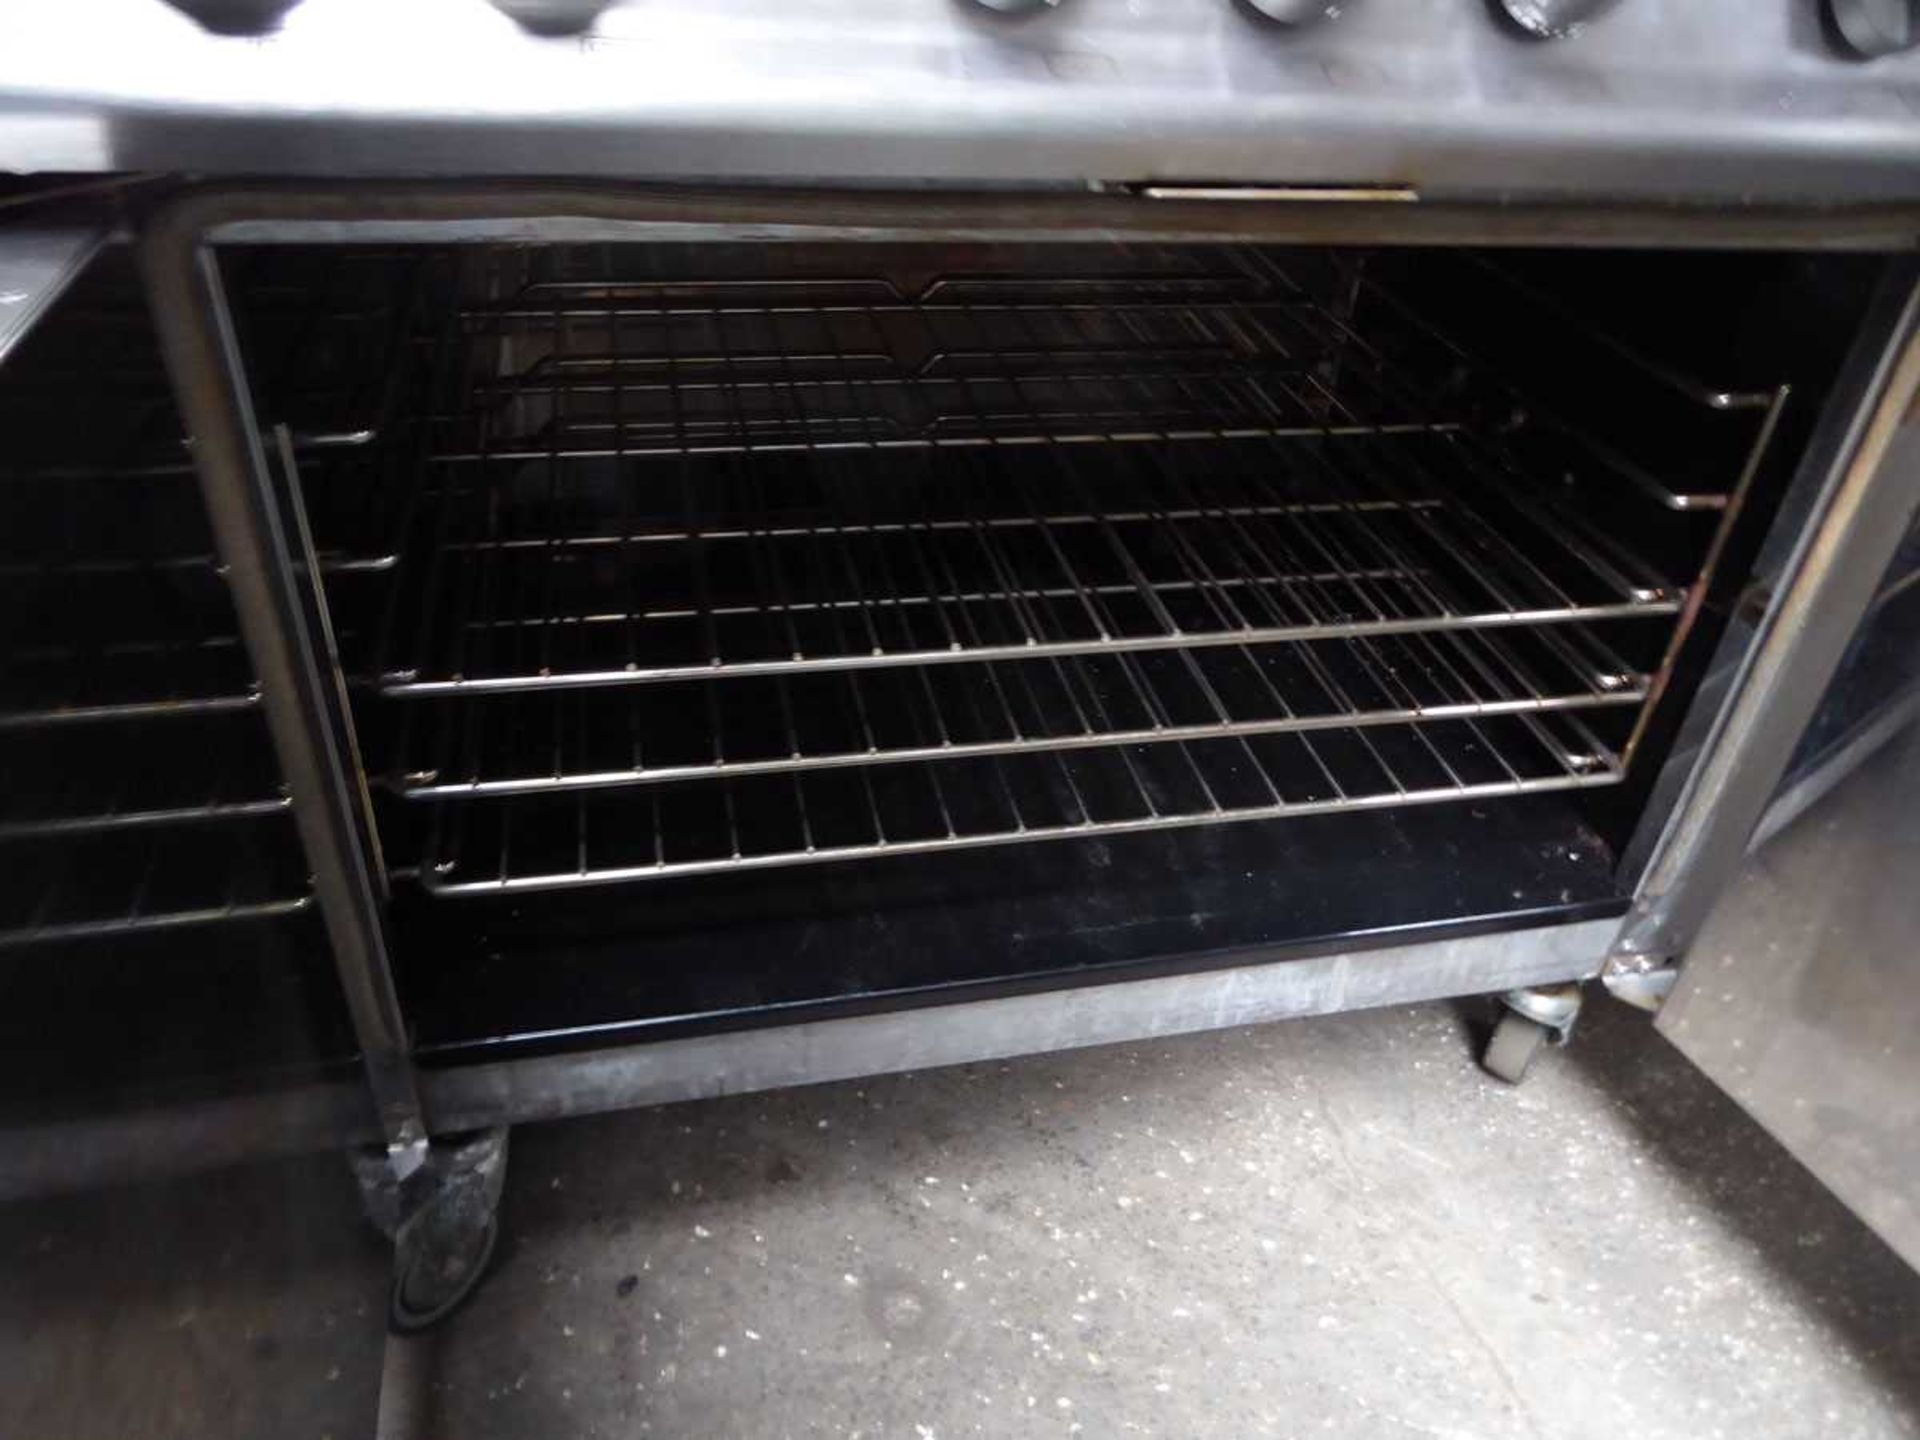 90cm gas Falcon 6 burner cooker with 2 door oven under - Image 3 of 3